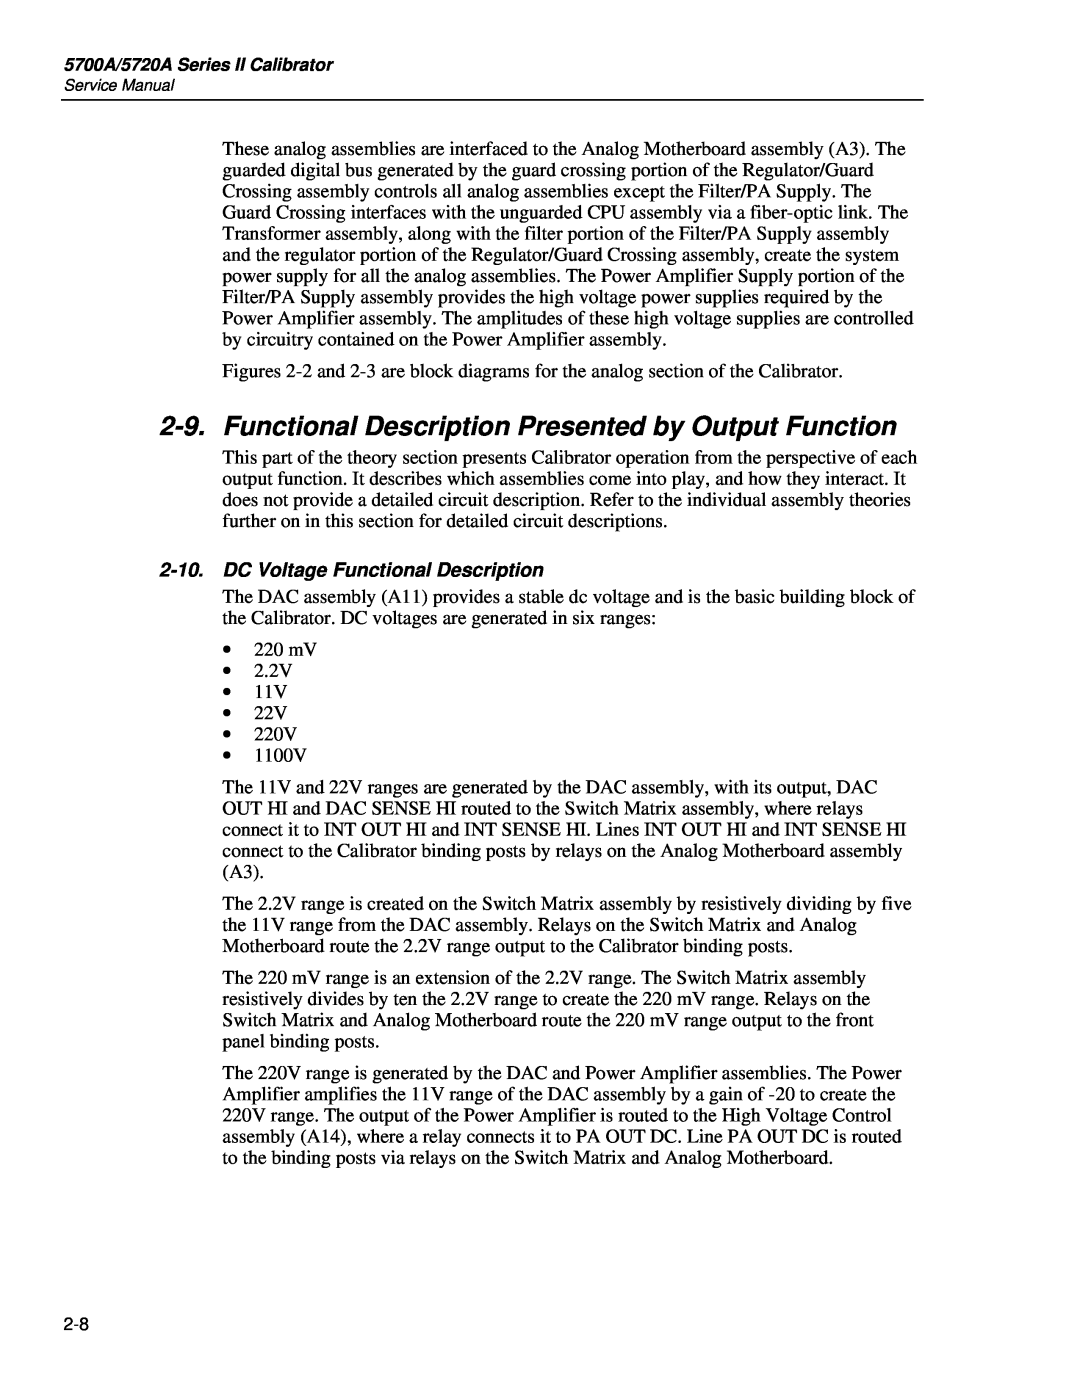 Fluke 5720A service manual Functional Description Presented by Output Function, DC Voltage Functional Description 